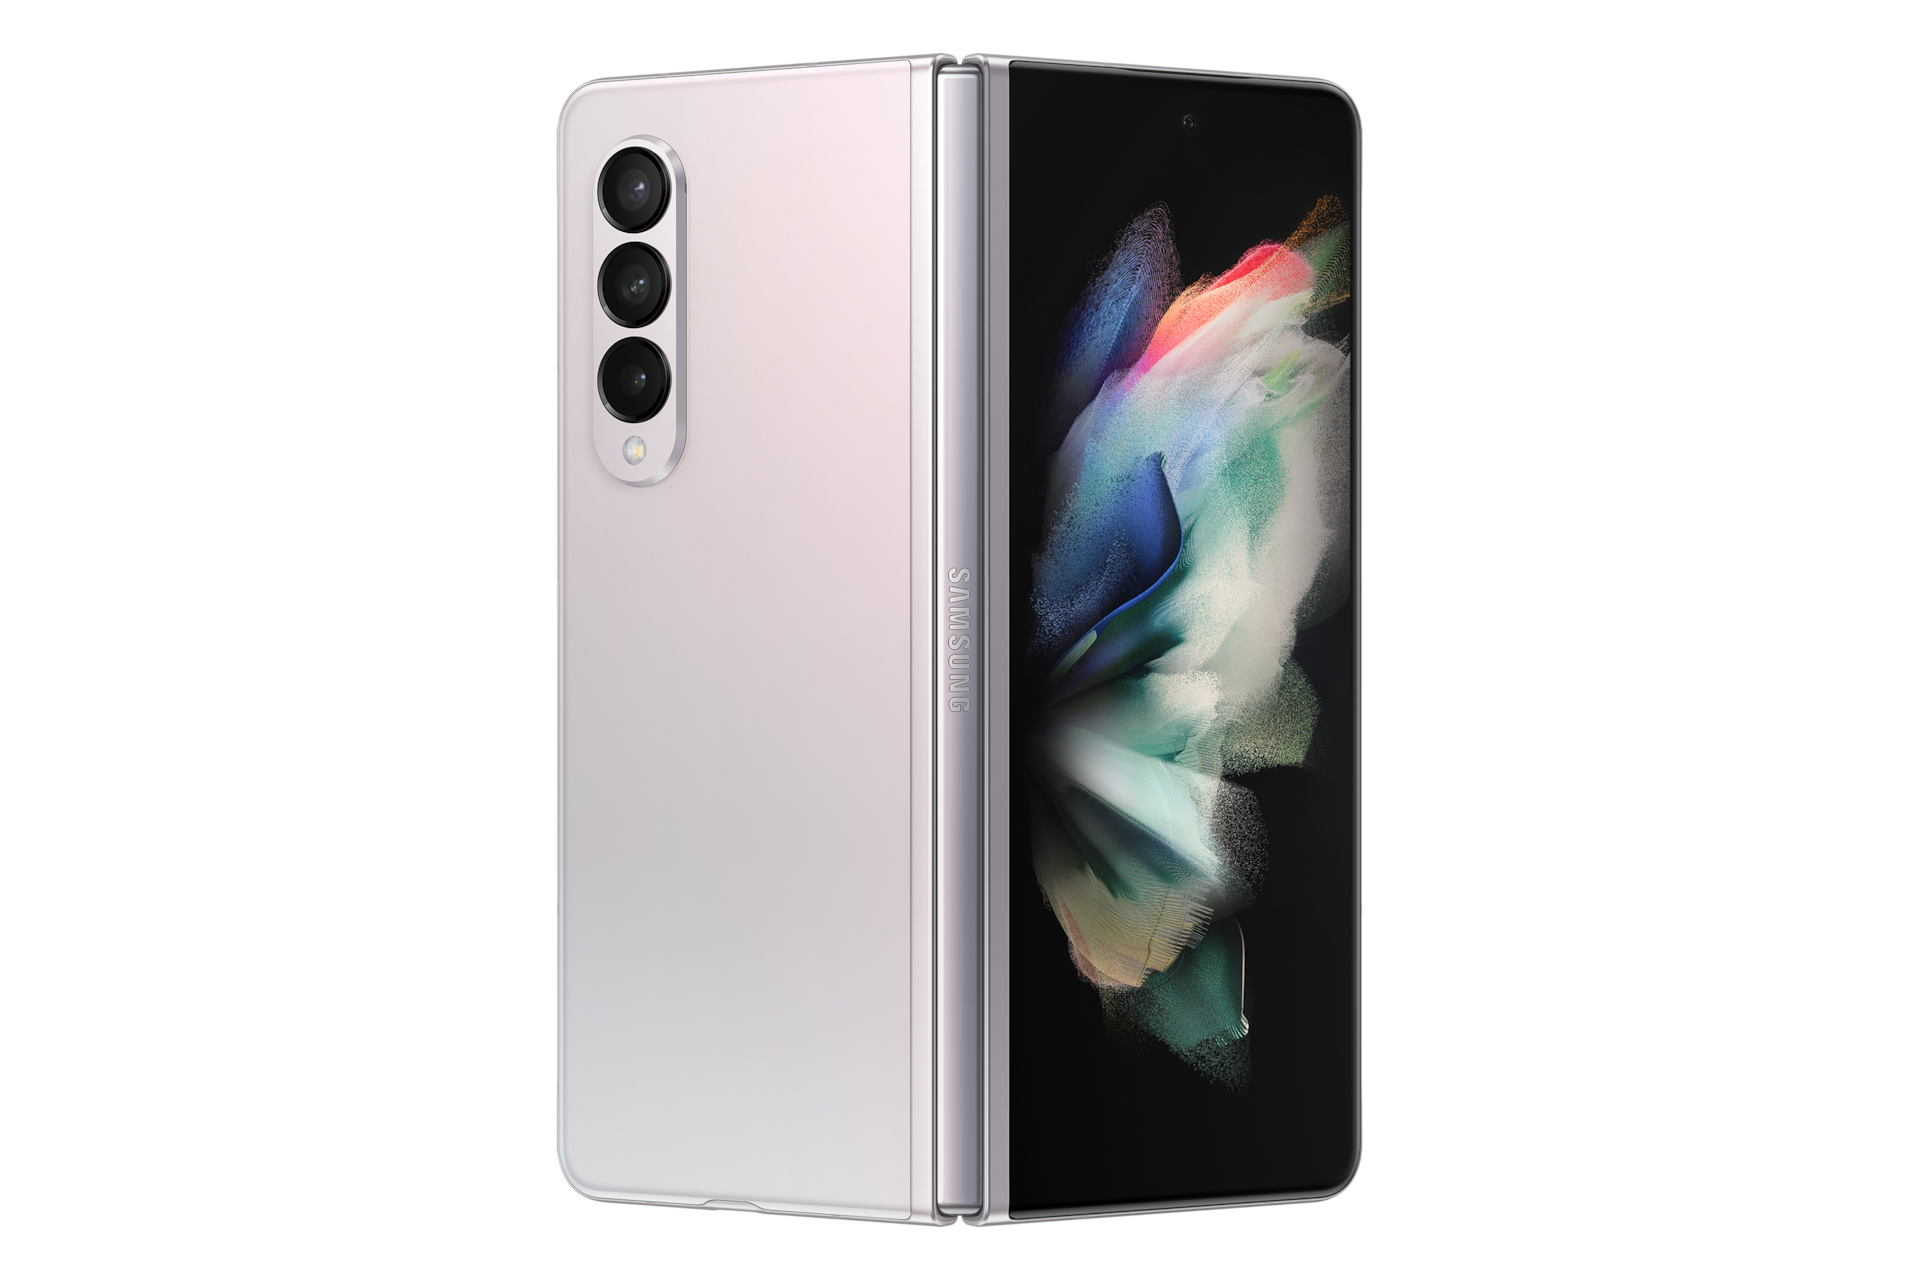 Cek harga Samsung Galaxy Z Fold 3 Phantom Silver dengan kamera selfie wide-angle, ketahui daftar harga Samsung Fold 3 resmi di Samsung Indonesia.